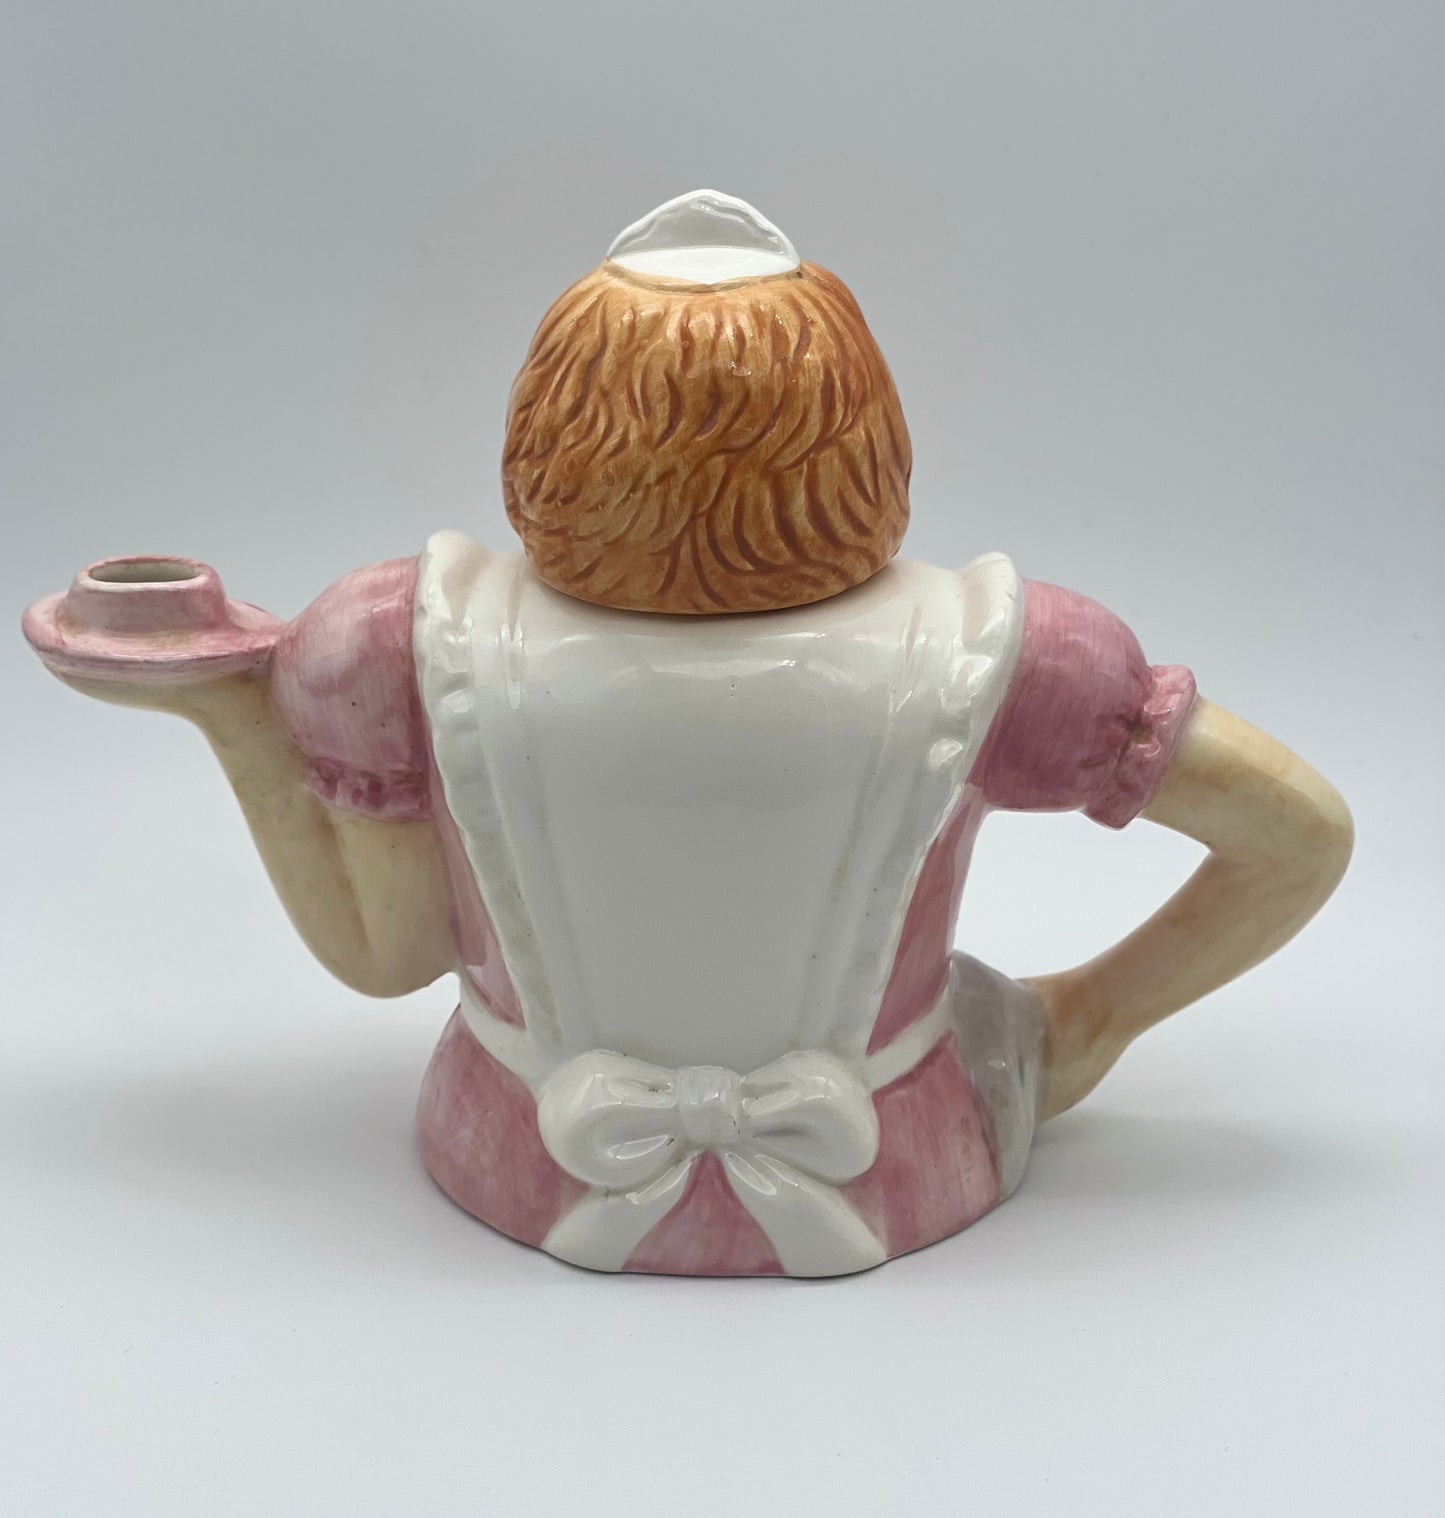 Vintage Kmart Corporation Waitress Diner Server Teapot Ceramic Pink White